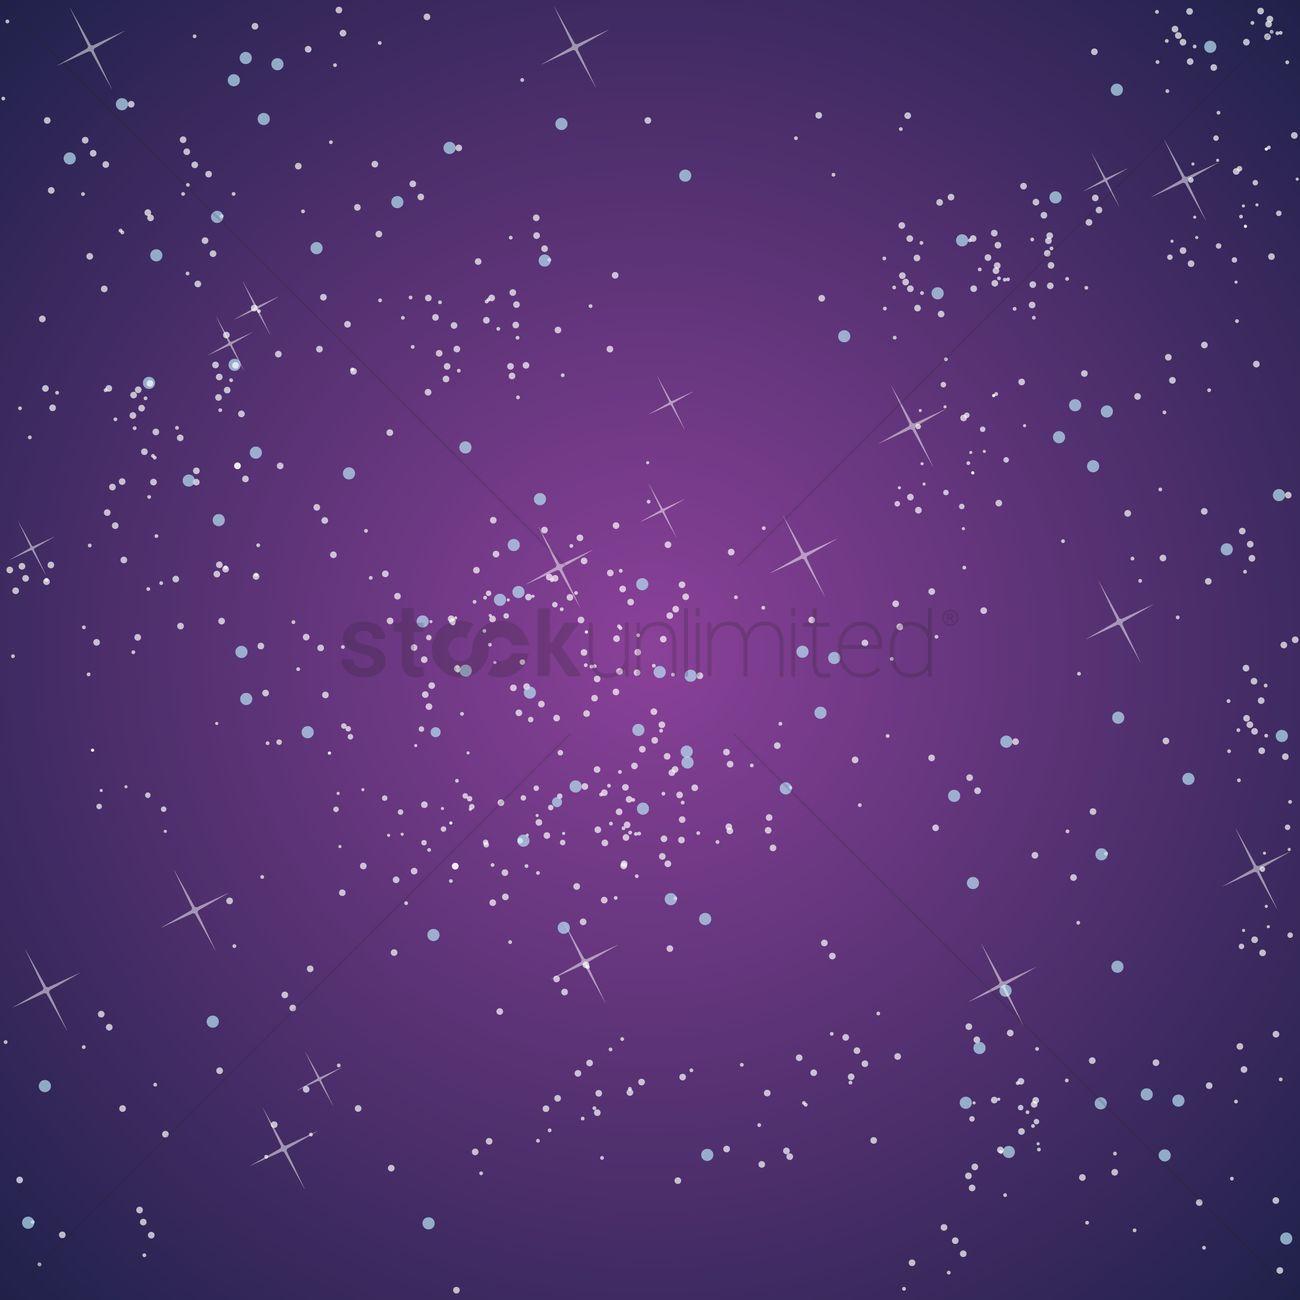 Galaxy sky background Vector Image